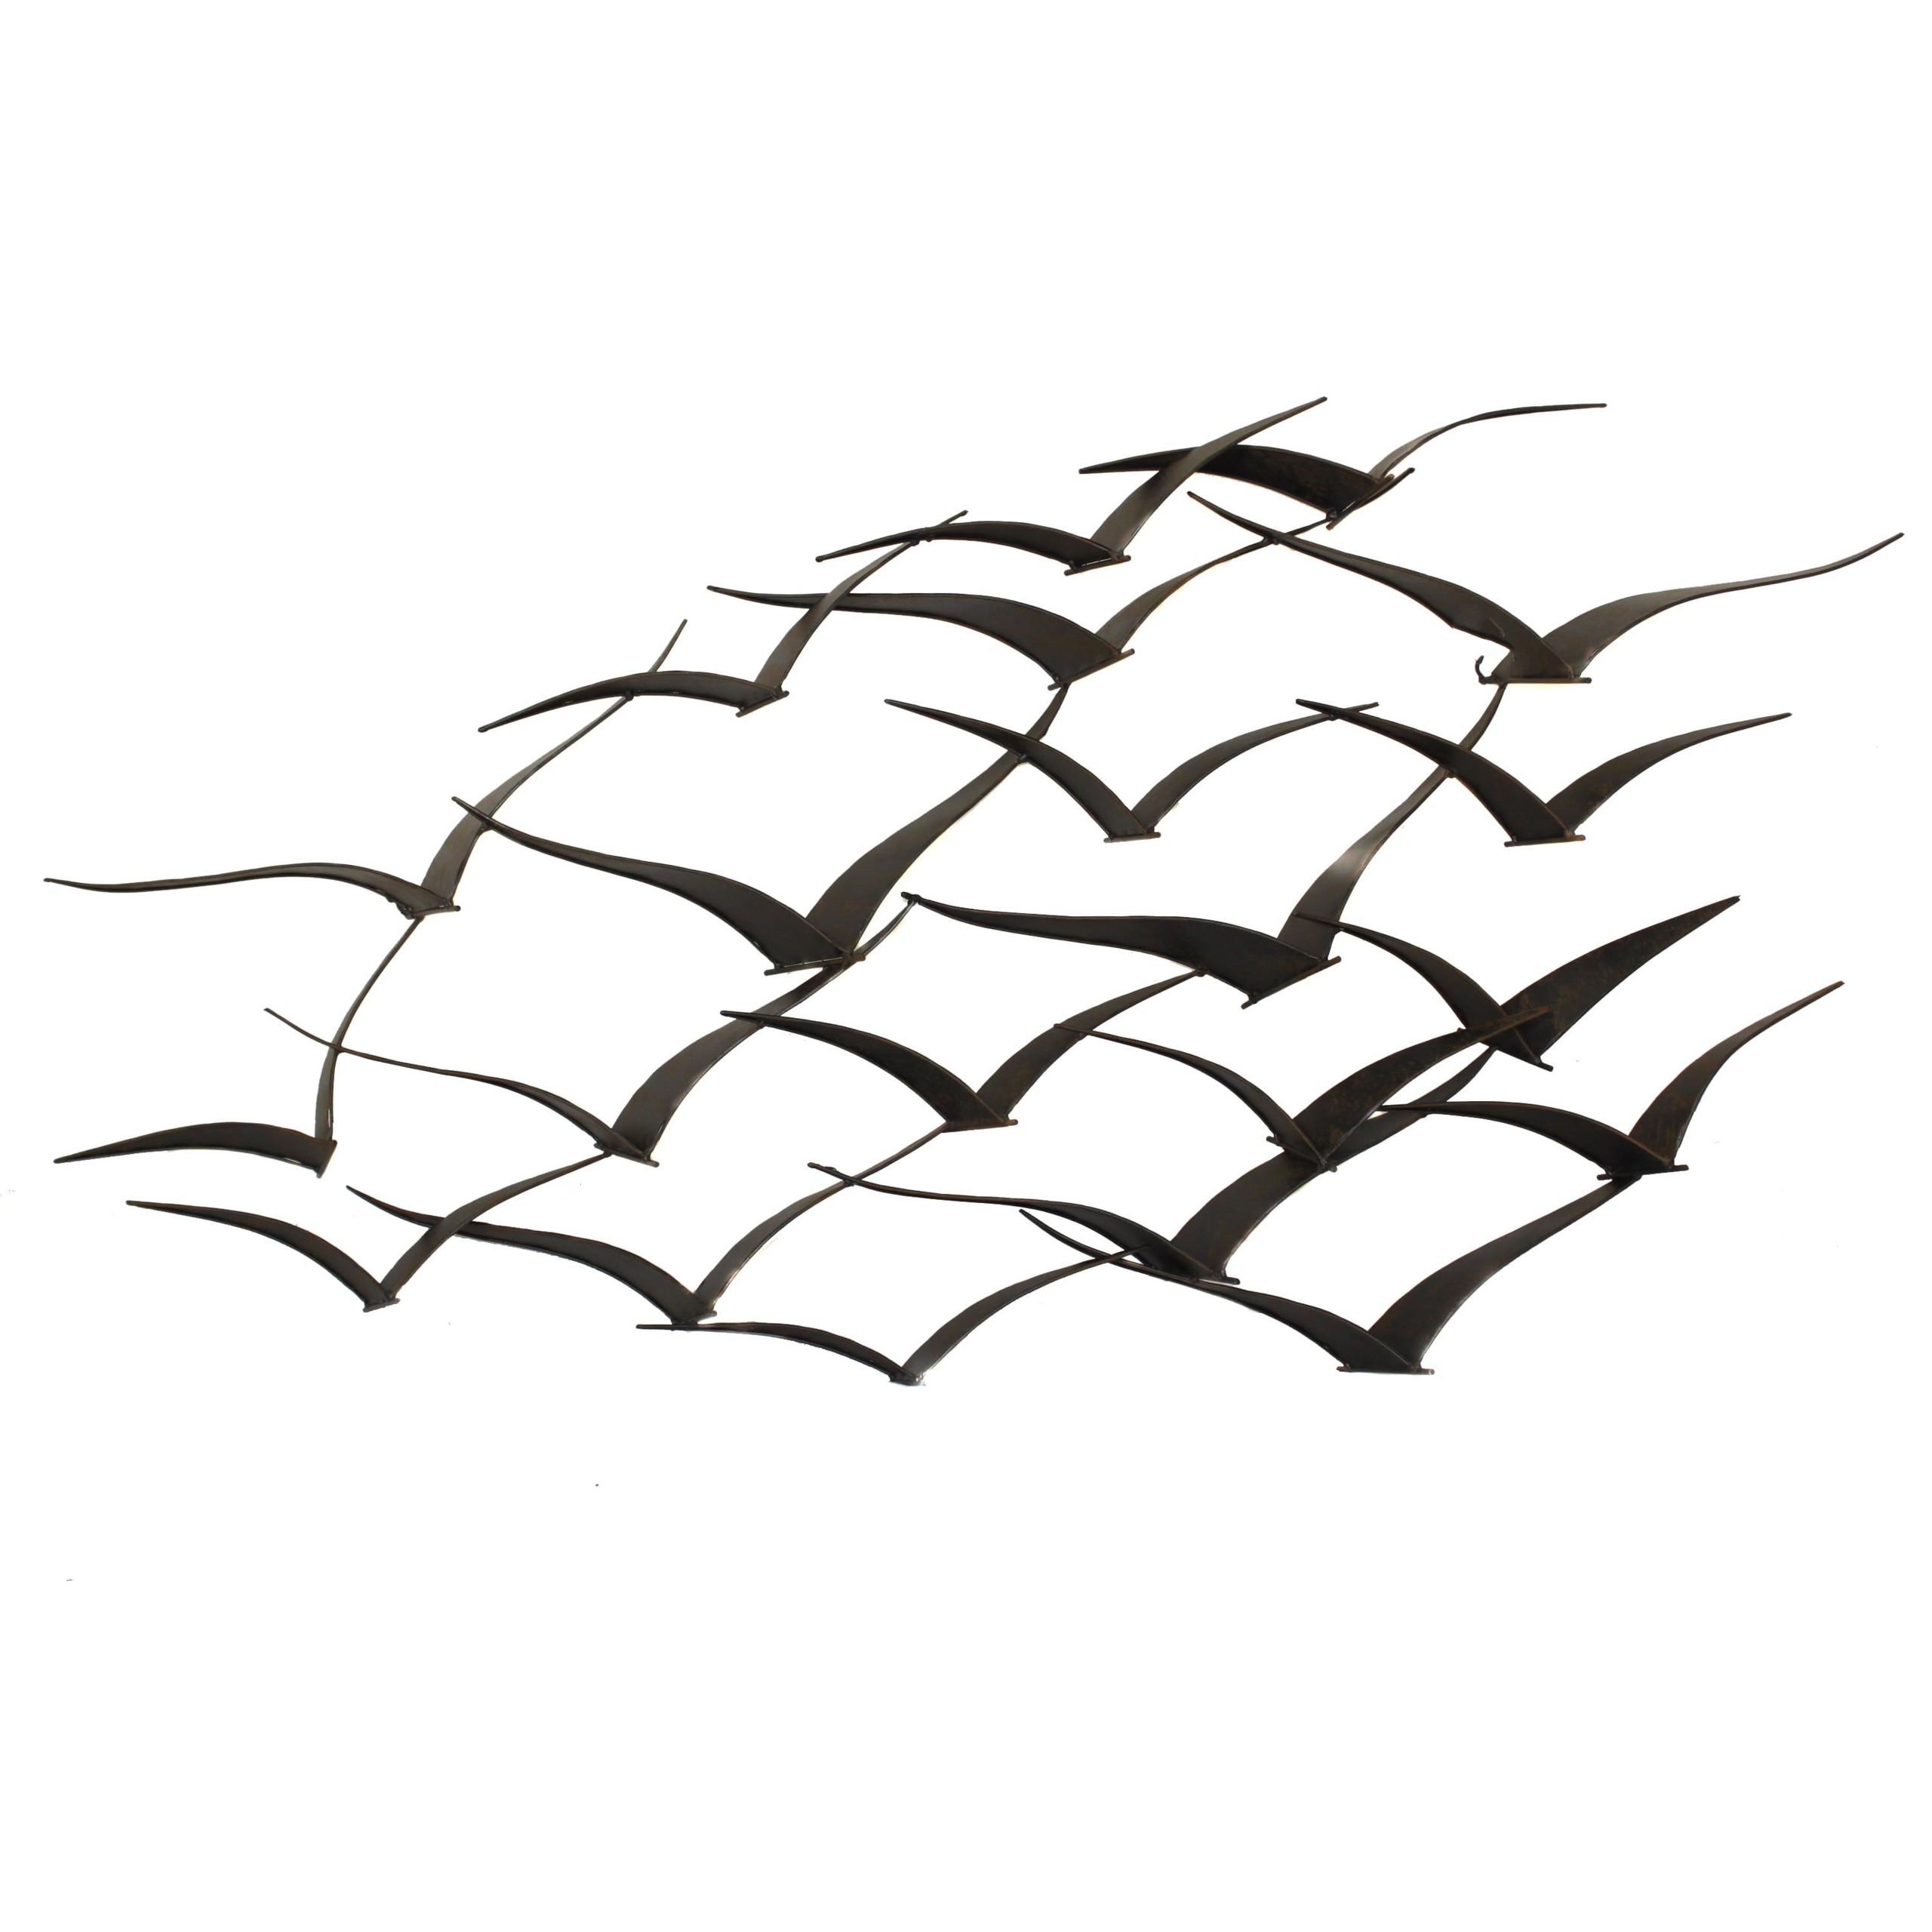 Handcrafted flock of metal flying birds wall art